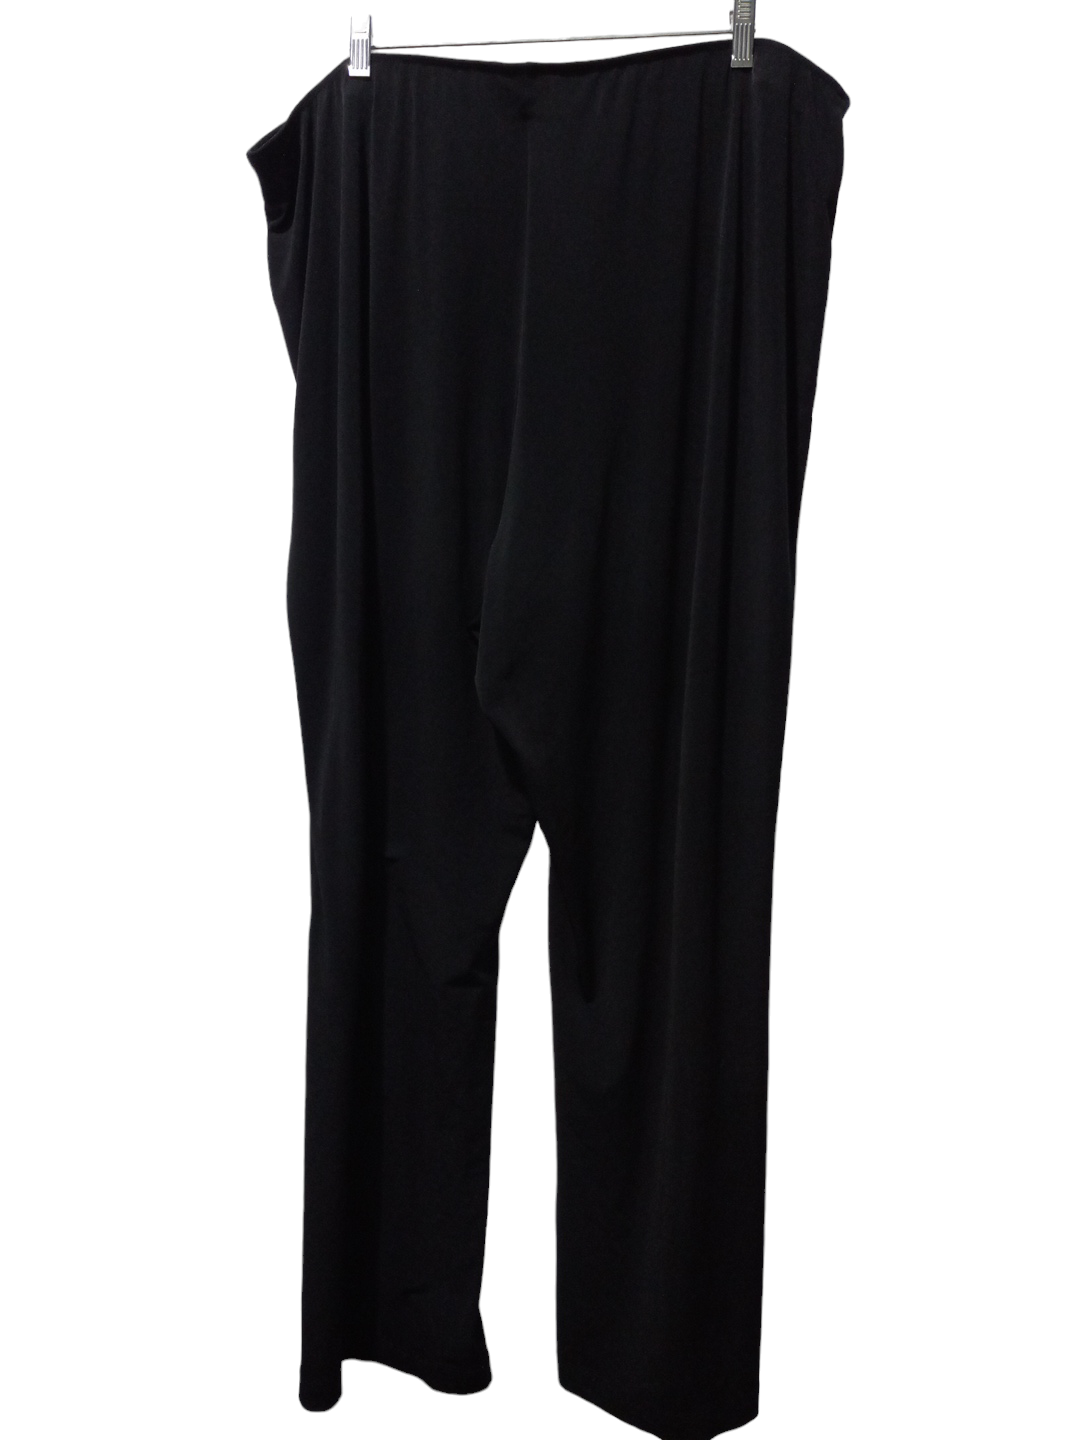 Black Pants Dress Liz Claiborne, Size 3x